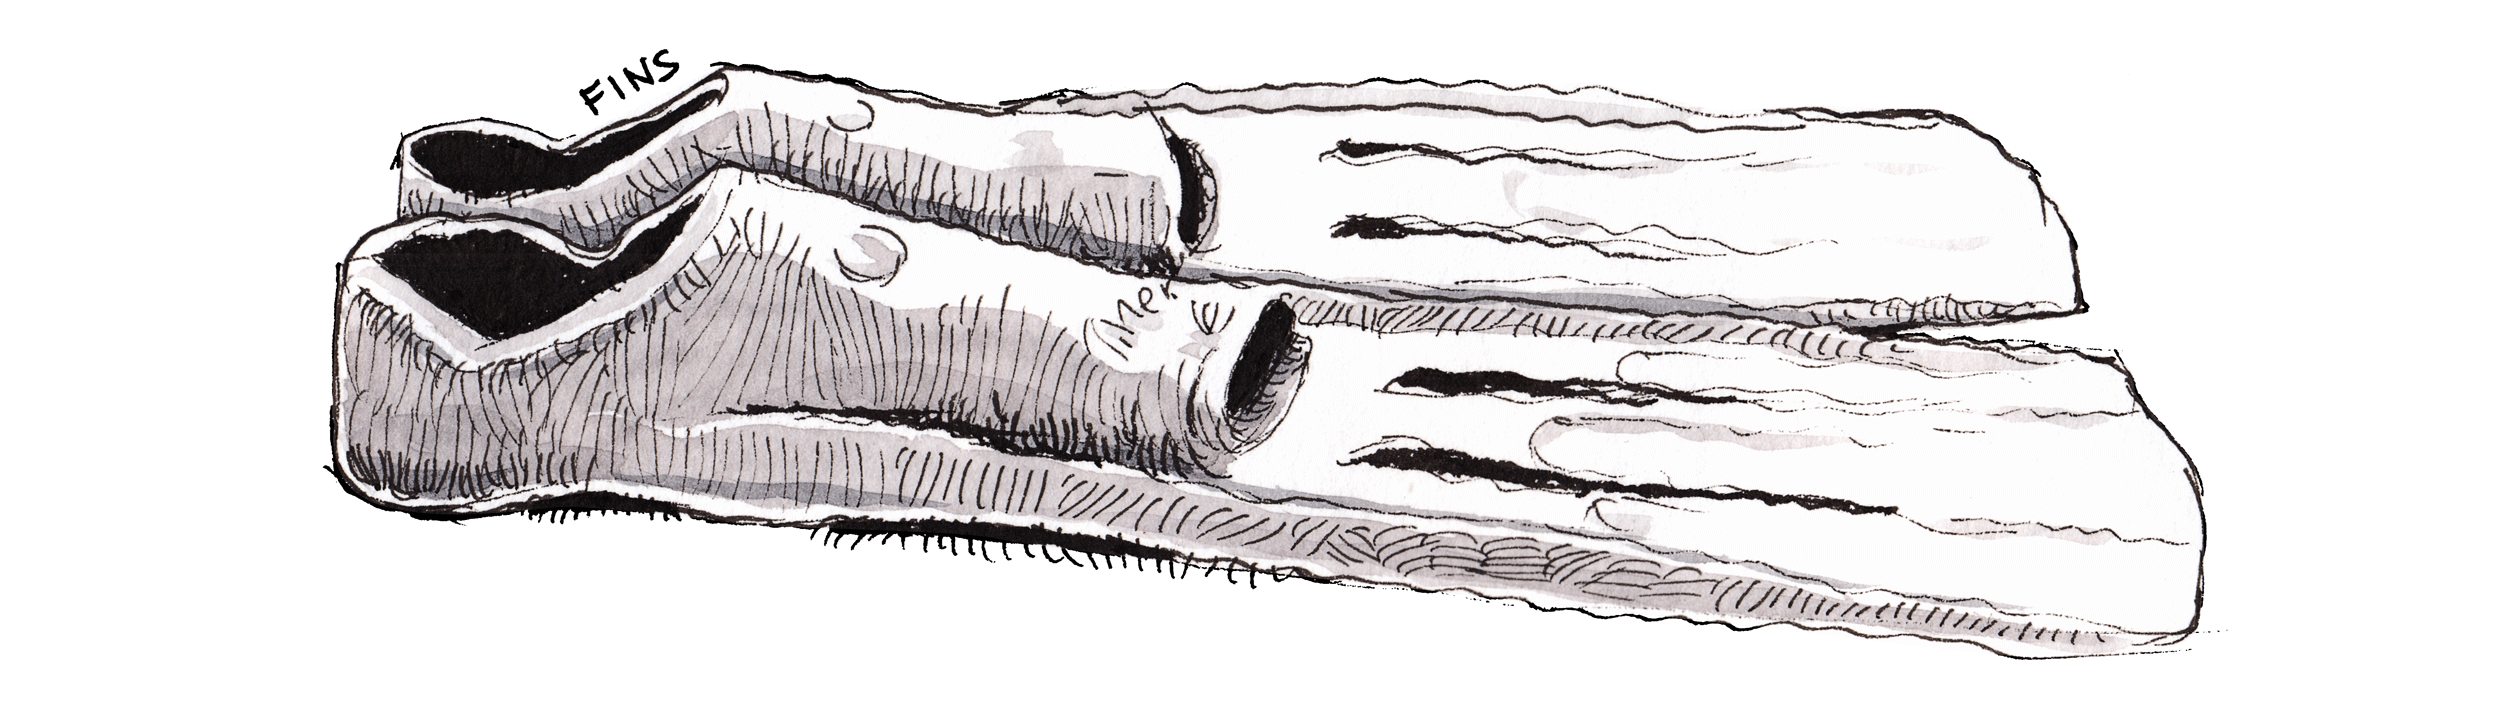 Sketch of diving fins.